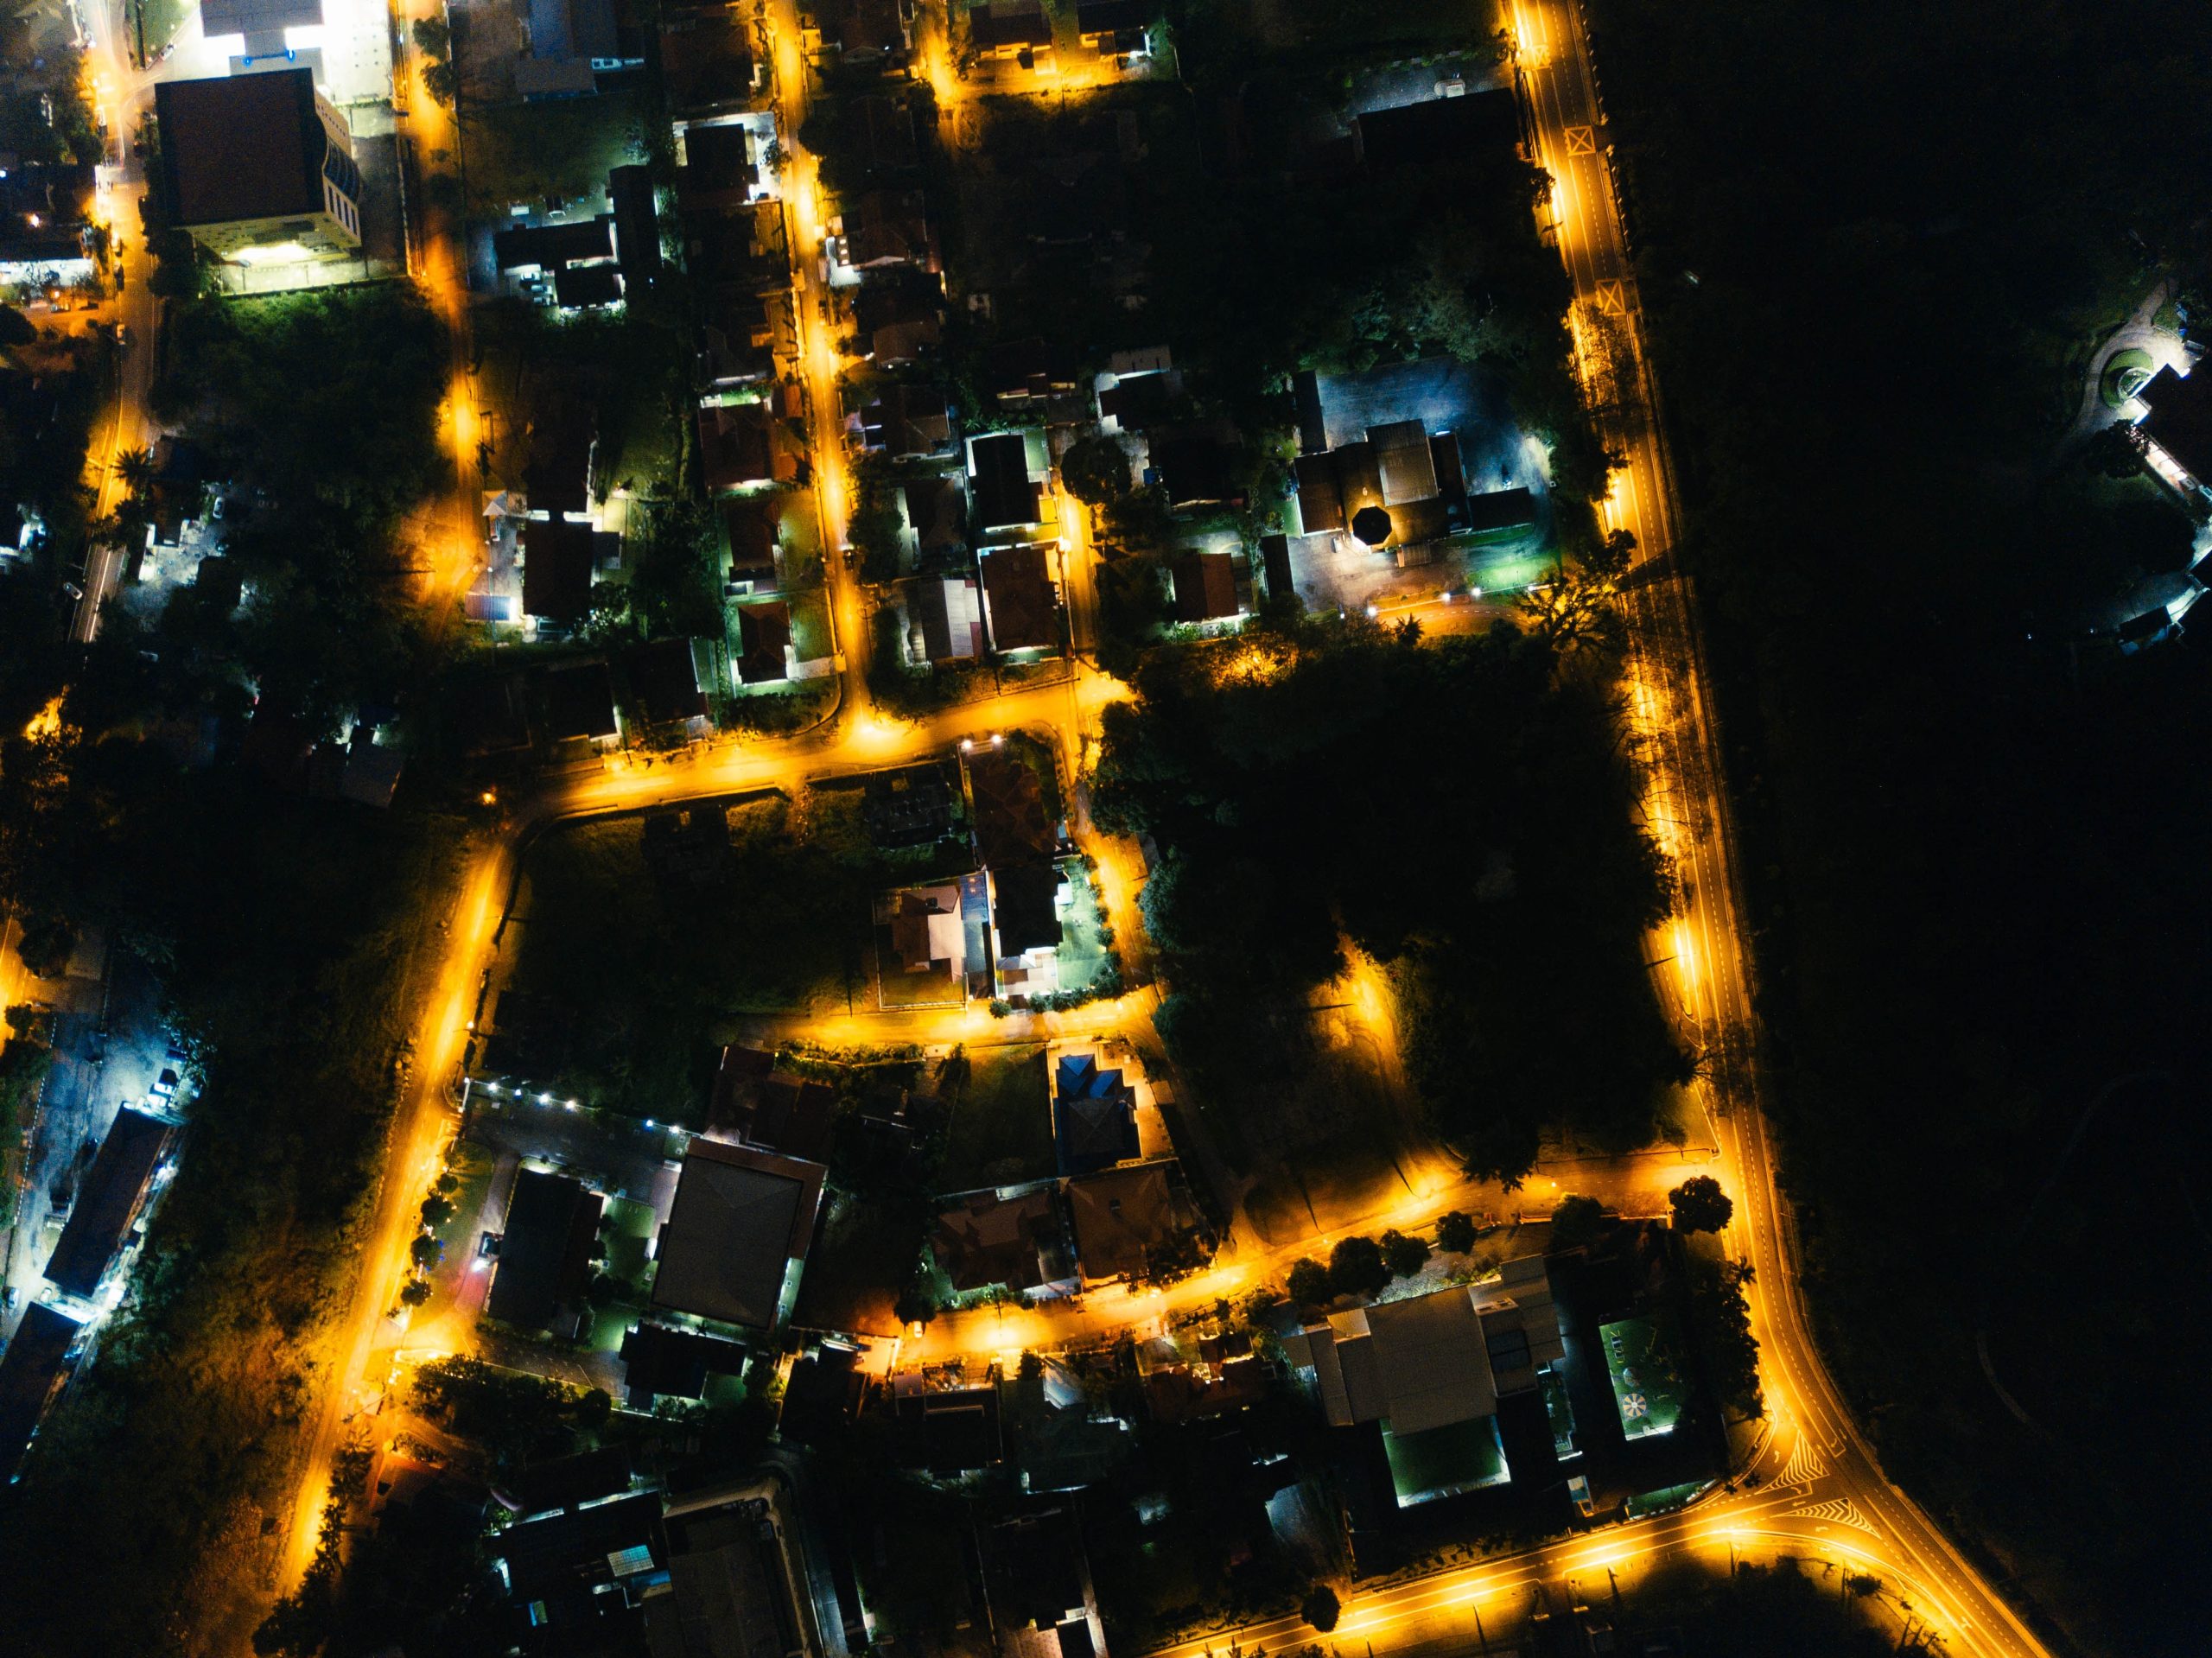 A suburban neighborhood at night